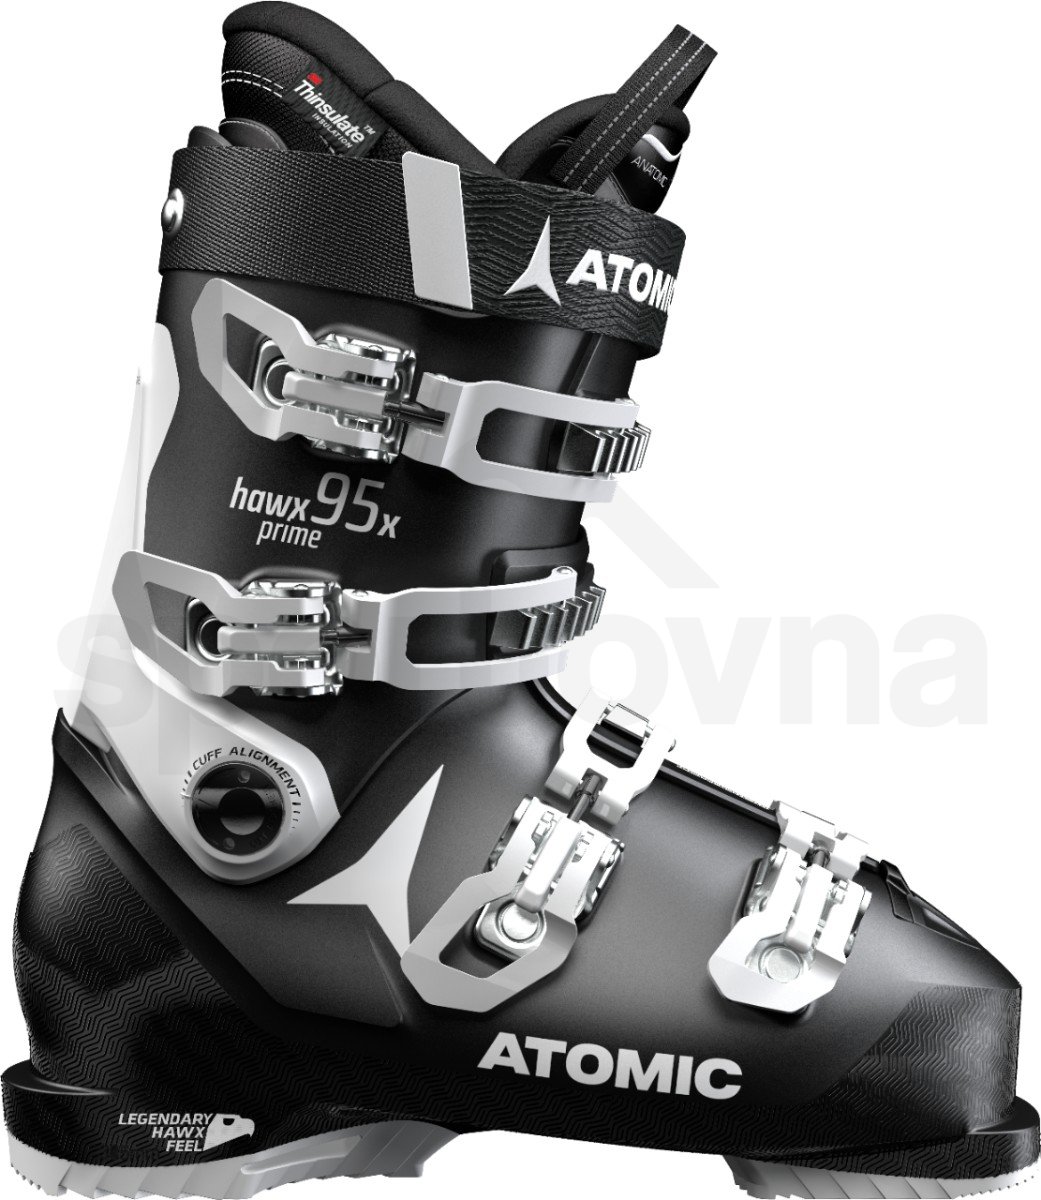 Lyžařské boty Atomic Hawx Prime 95X W - černá/bílá